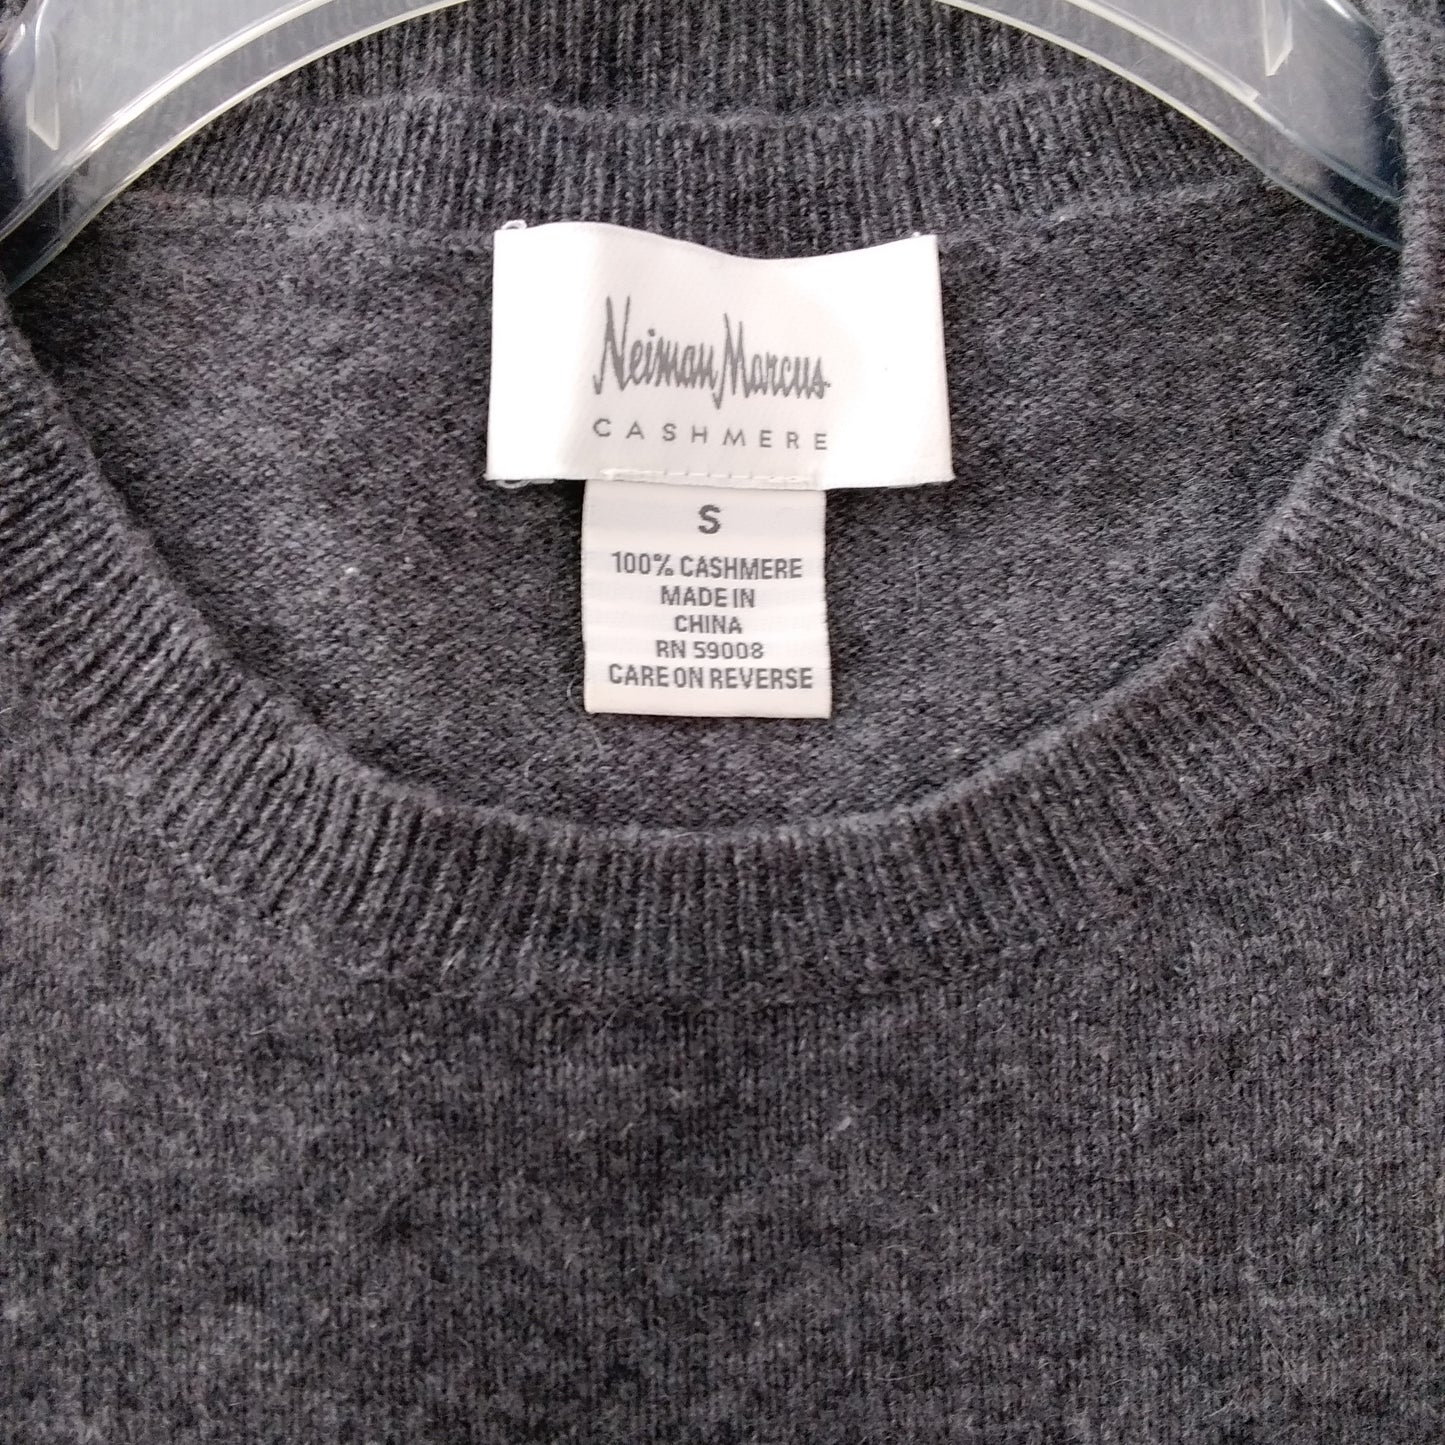 Neiman Marcus Cashmere Women's Gray Cashmere Sweater - Size S